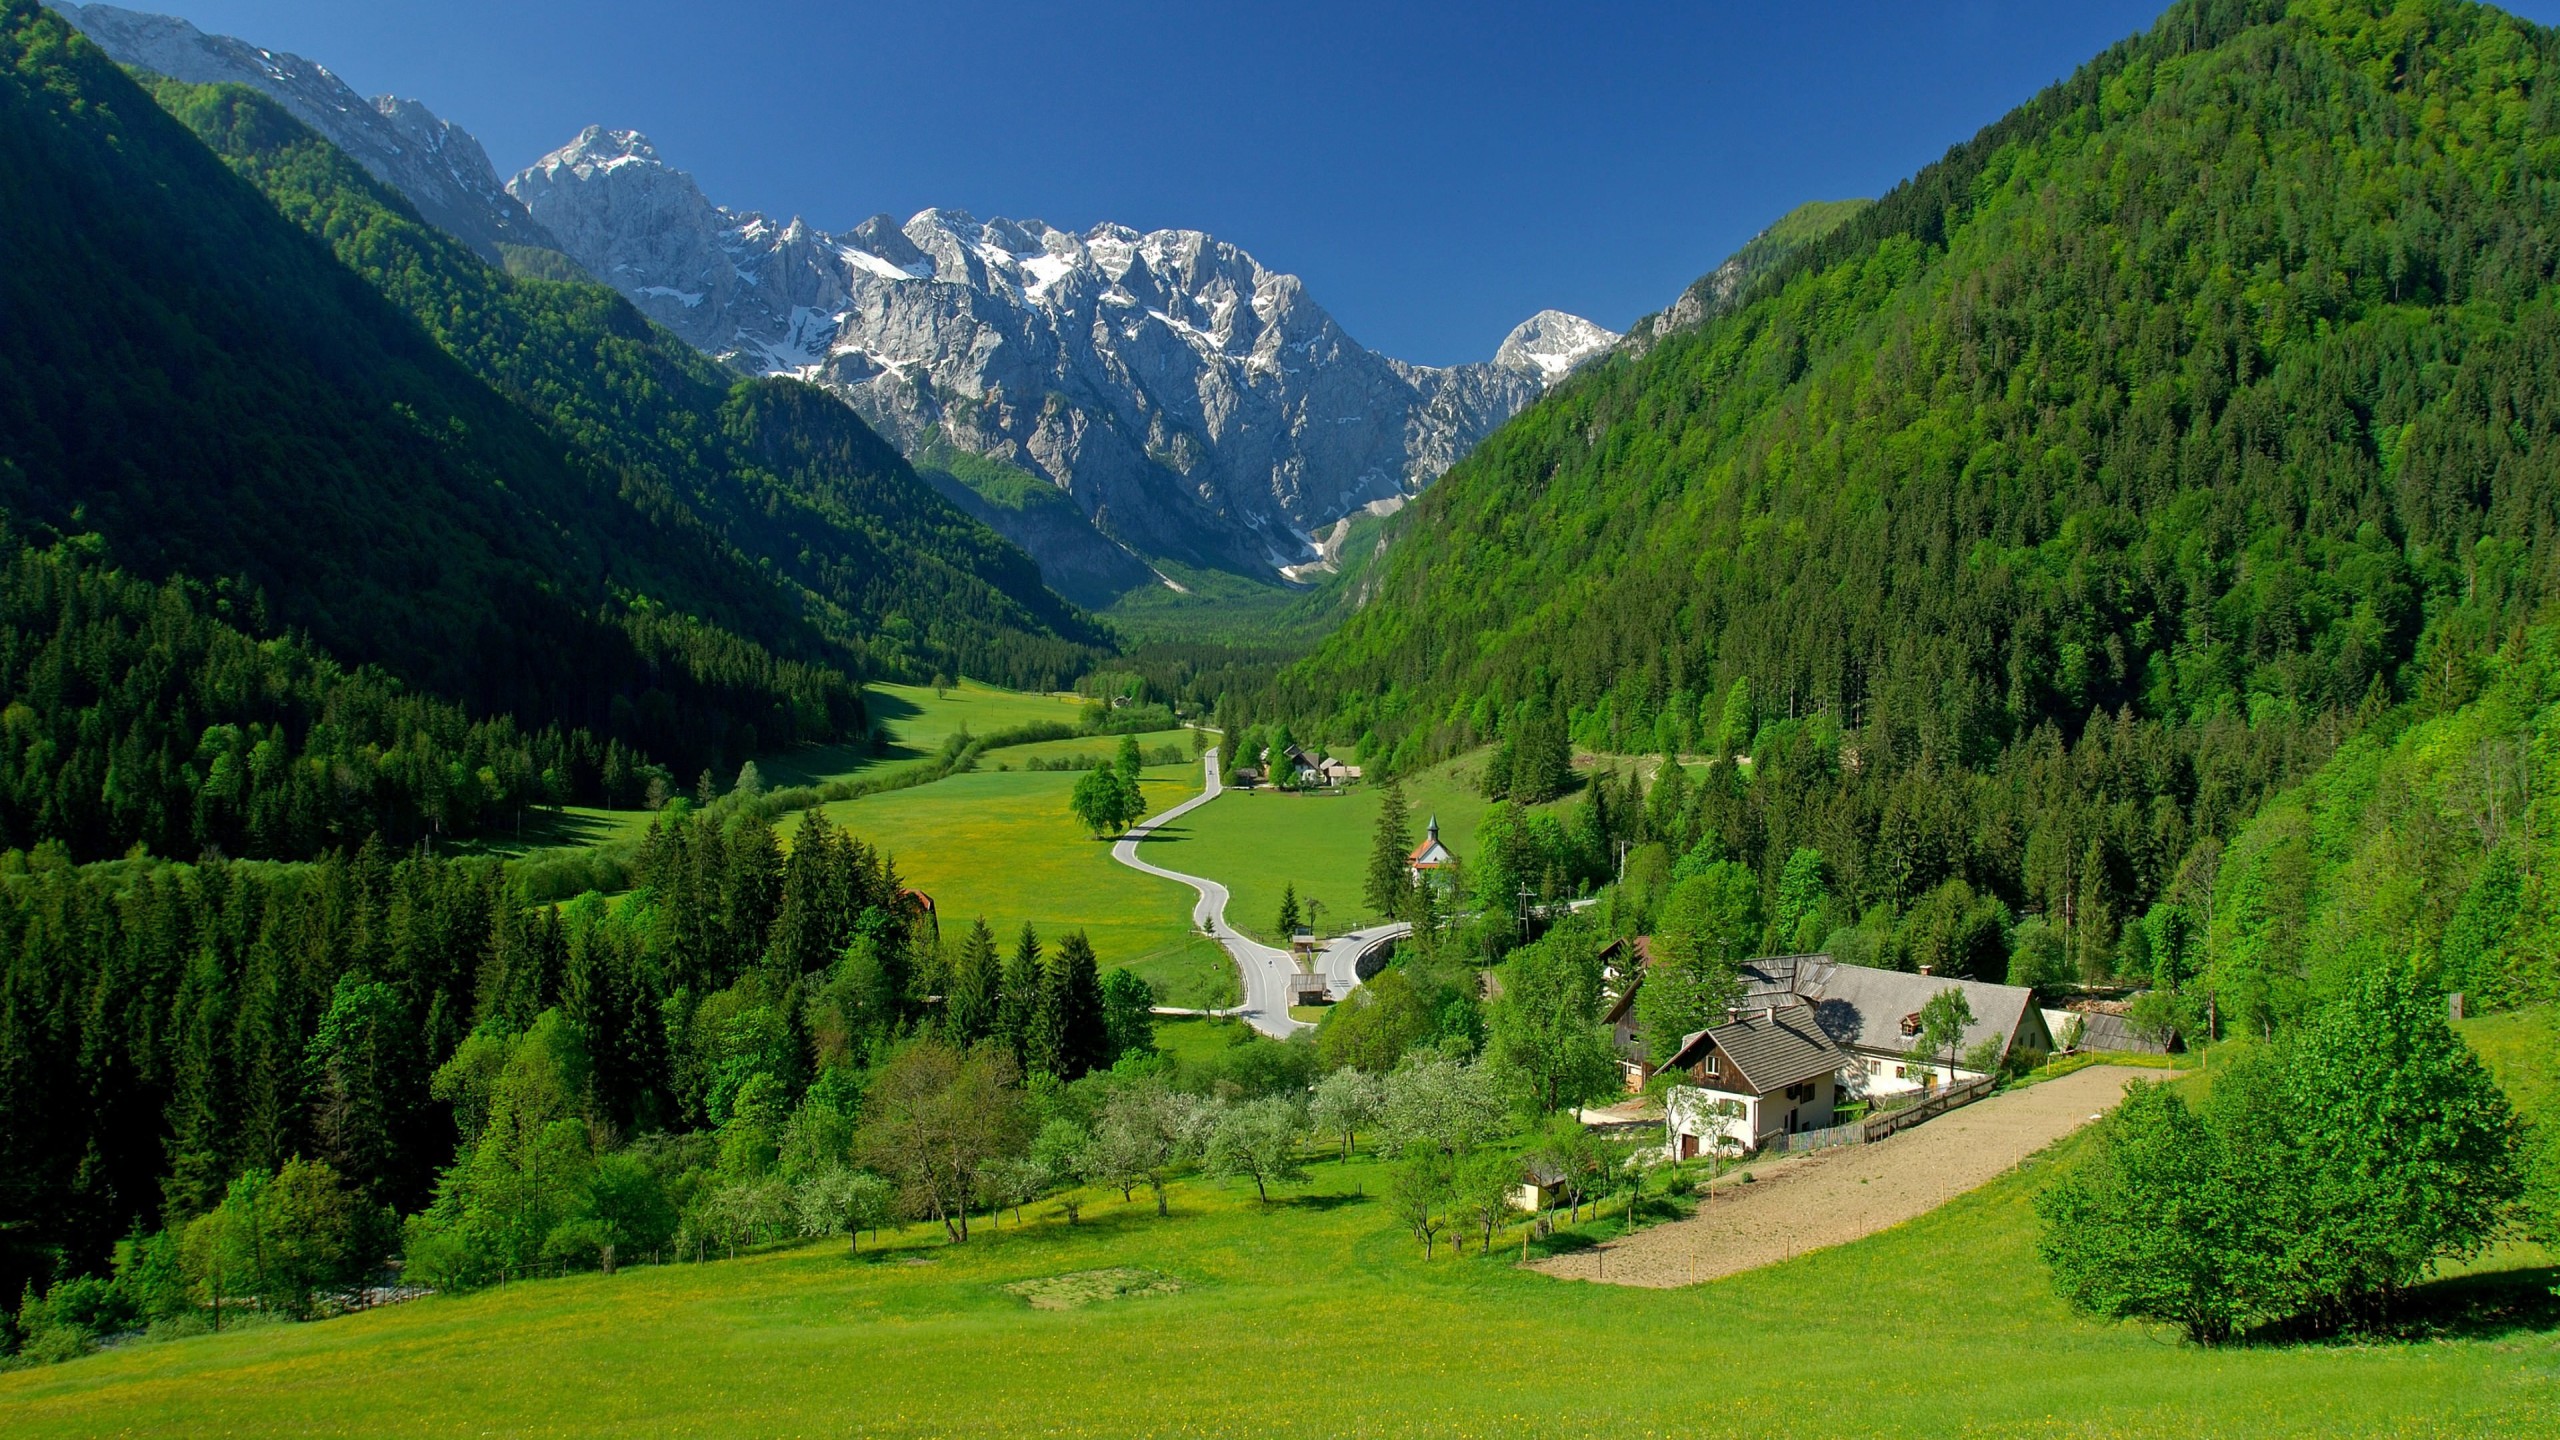 Spring In The Alpine Valley Wallpaper for Desktop 2560x1440